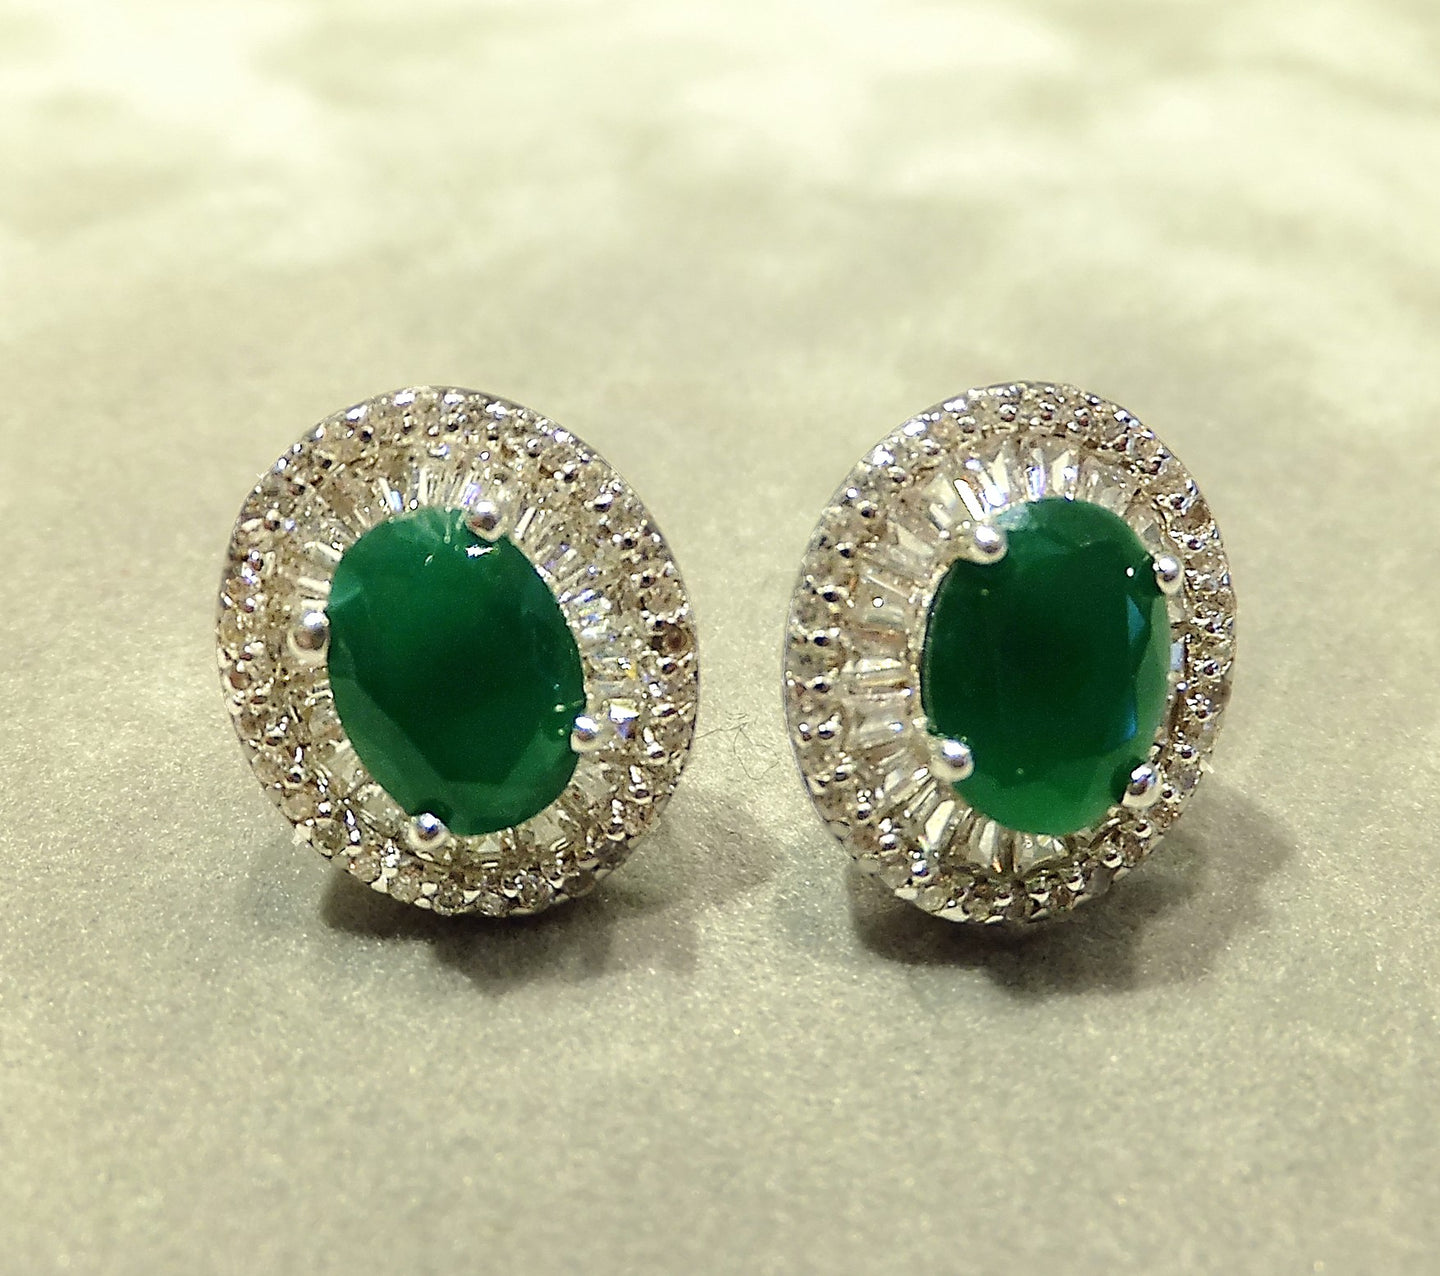 Indian Emeralds and White Topaz Gemstone Stud Earrings